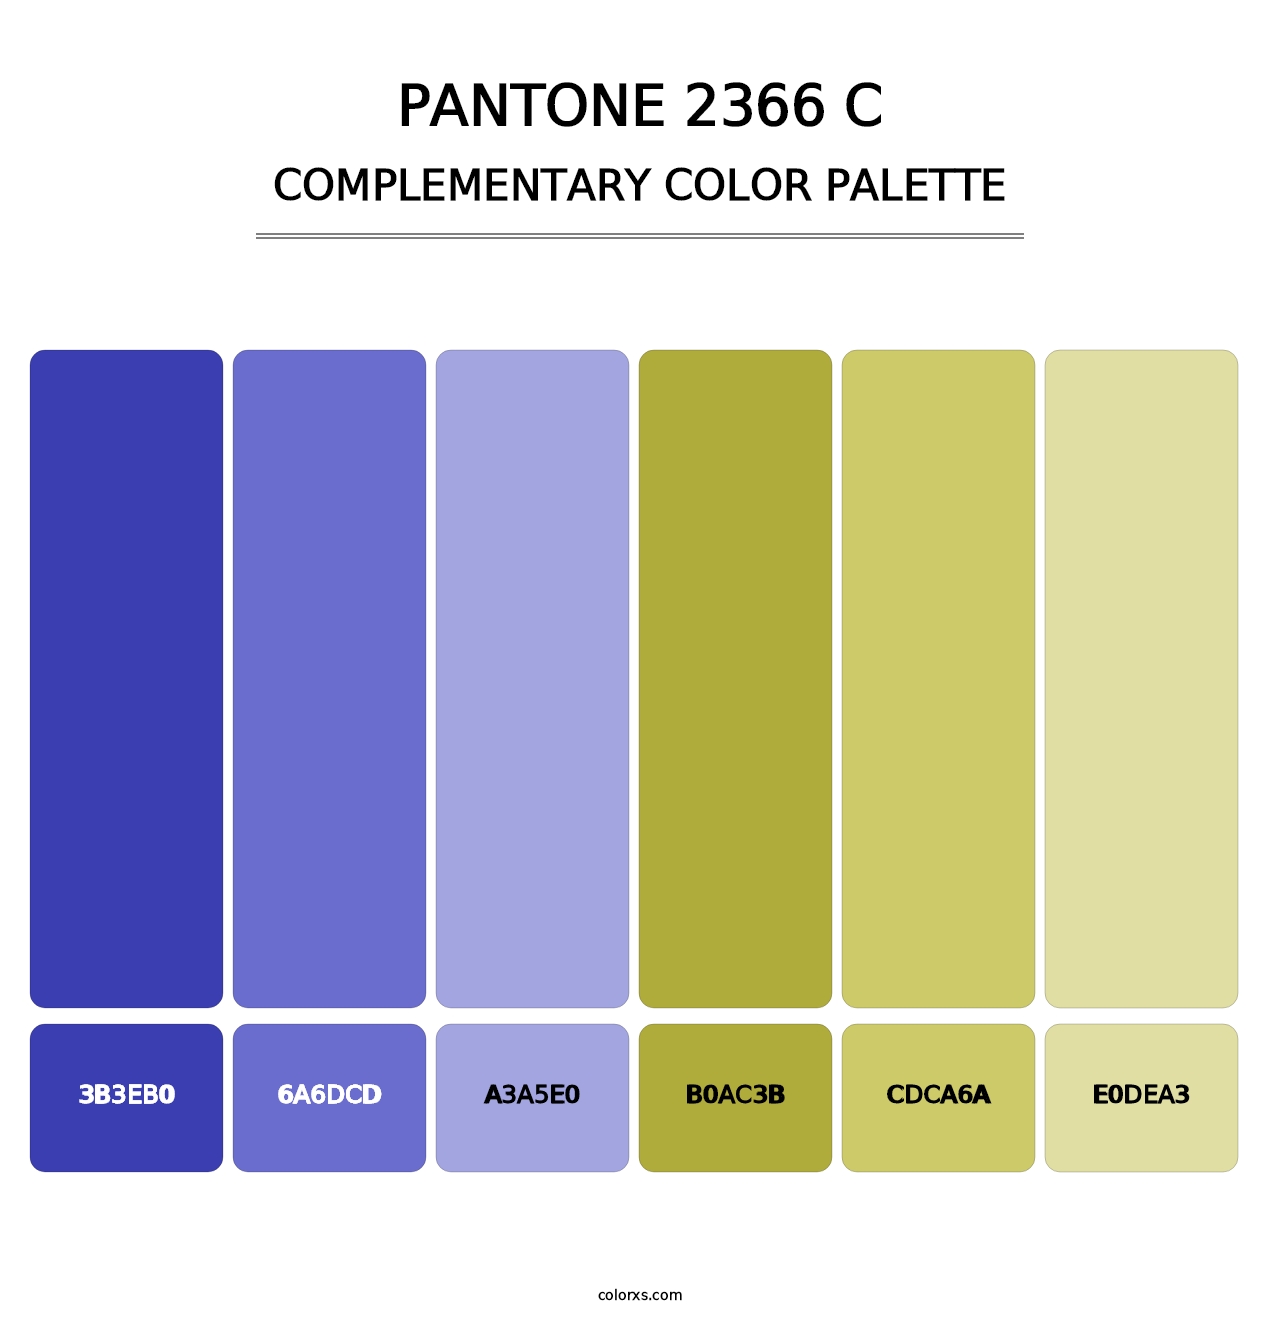 PANTONE 2366 C - Complementary Color Palette